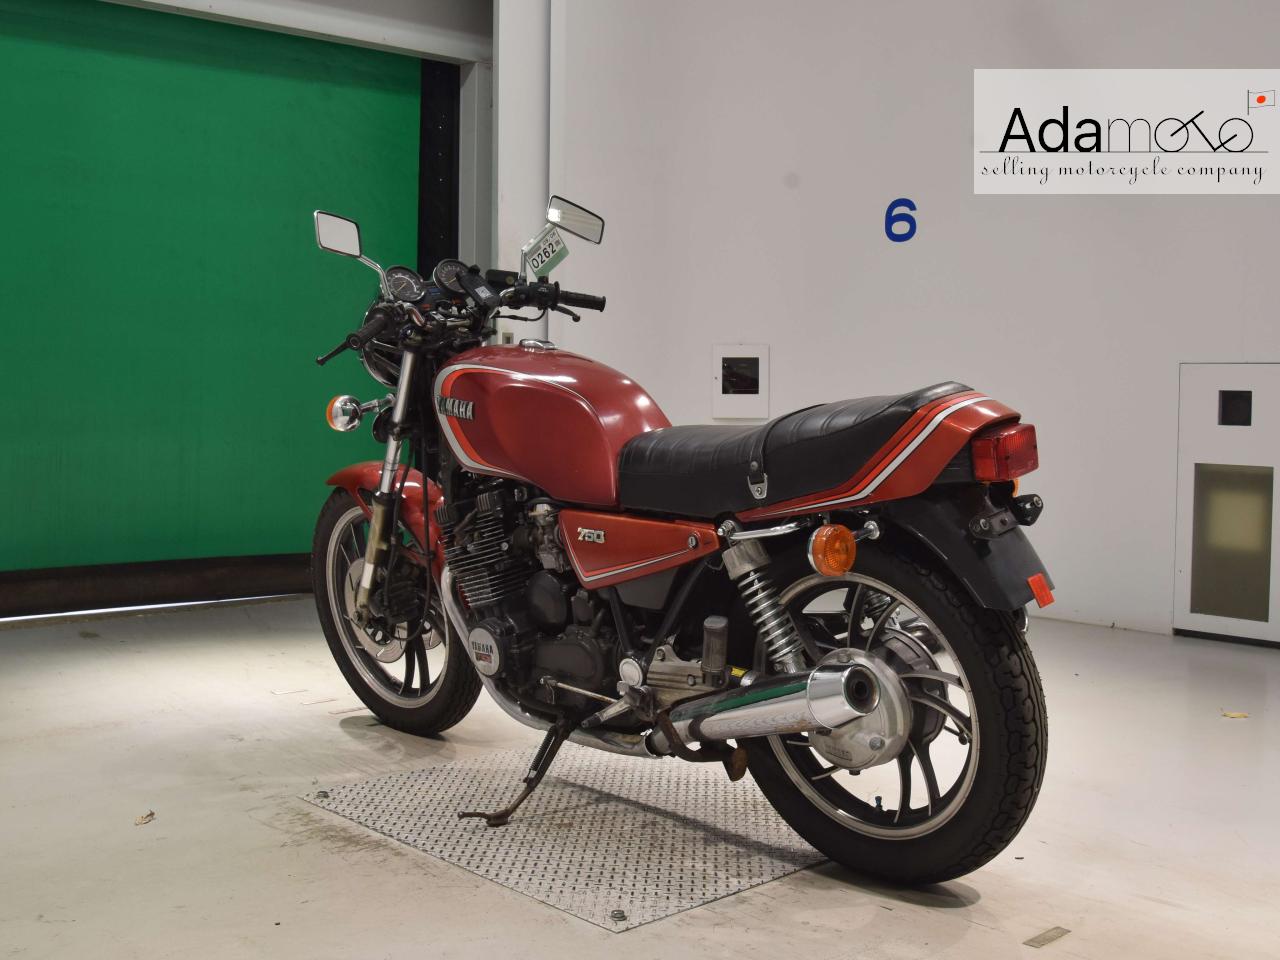 Yamaha XJ750E - Adamoto - Motorcycles from Japan